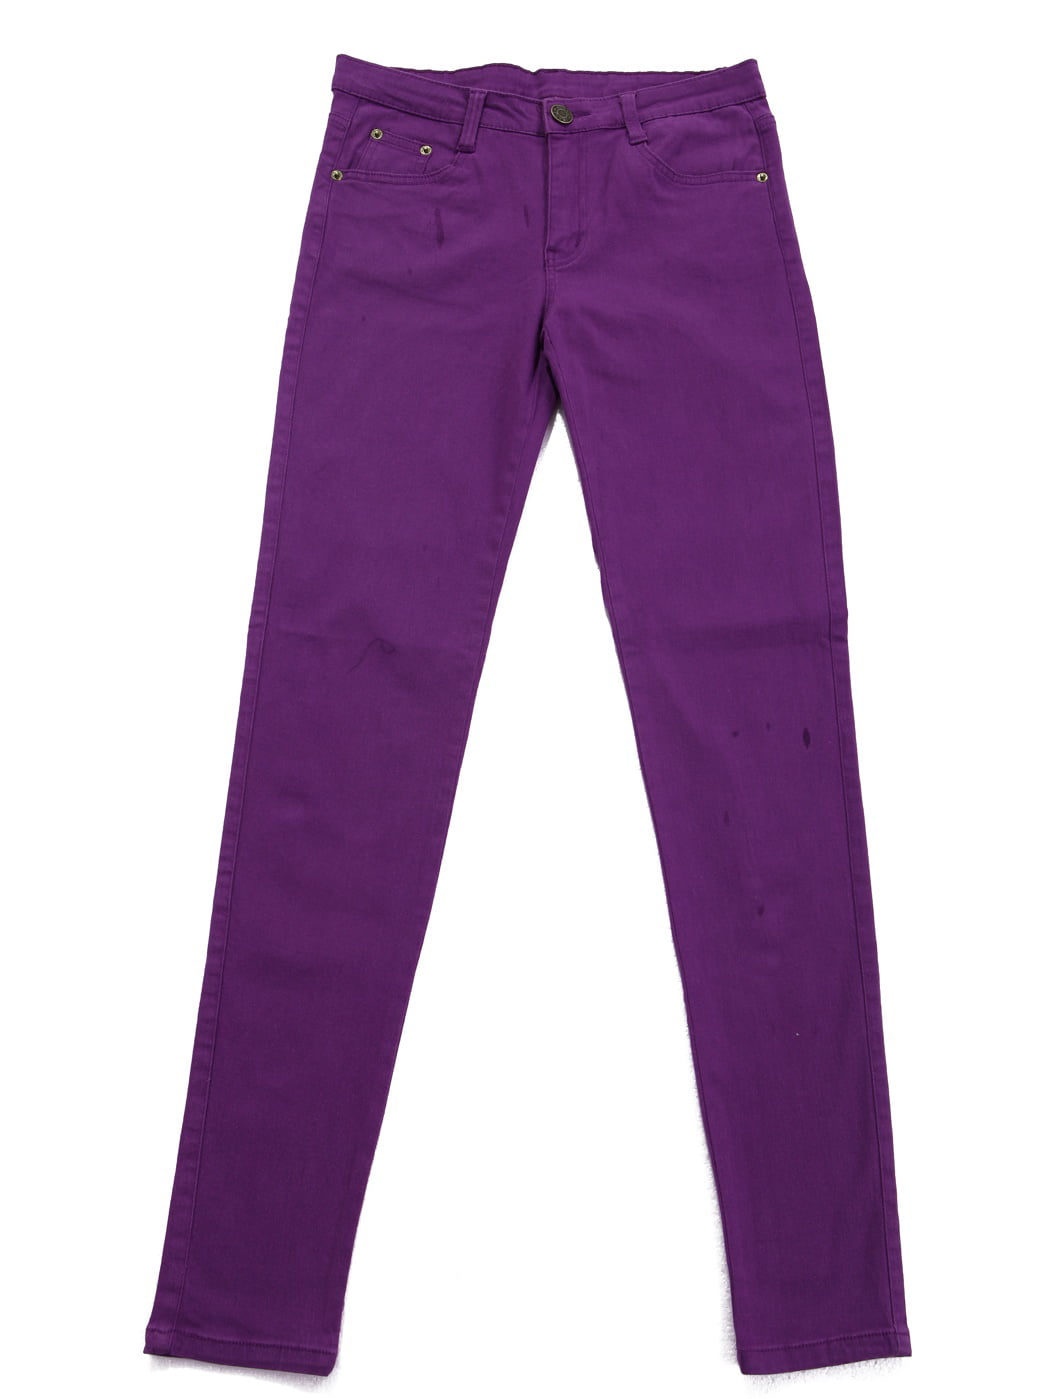 Purple jeans - pikolgp